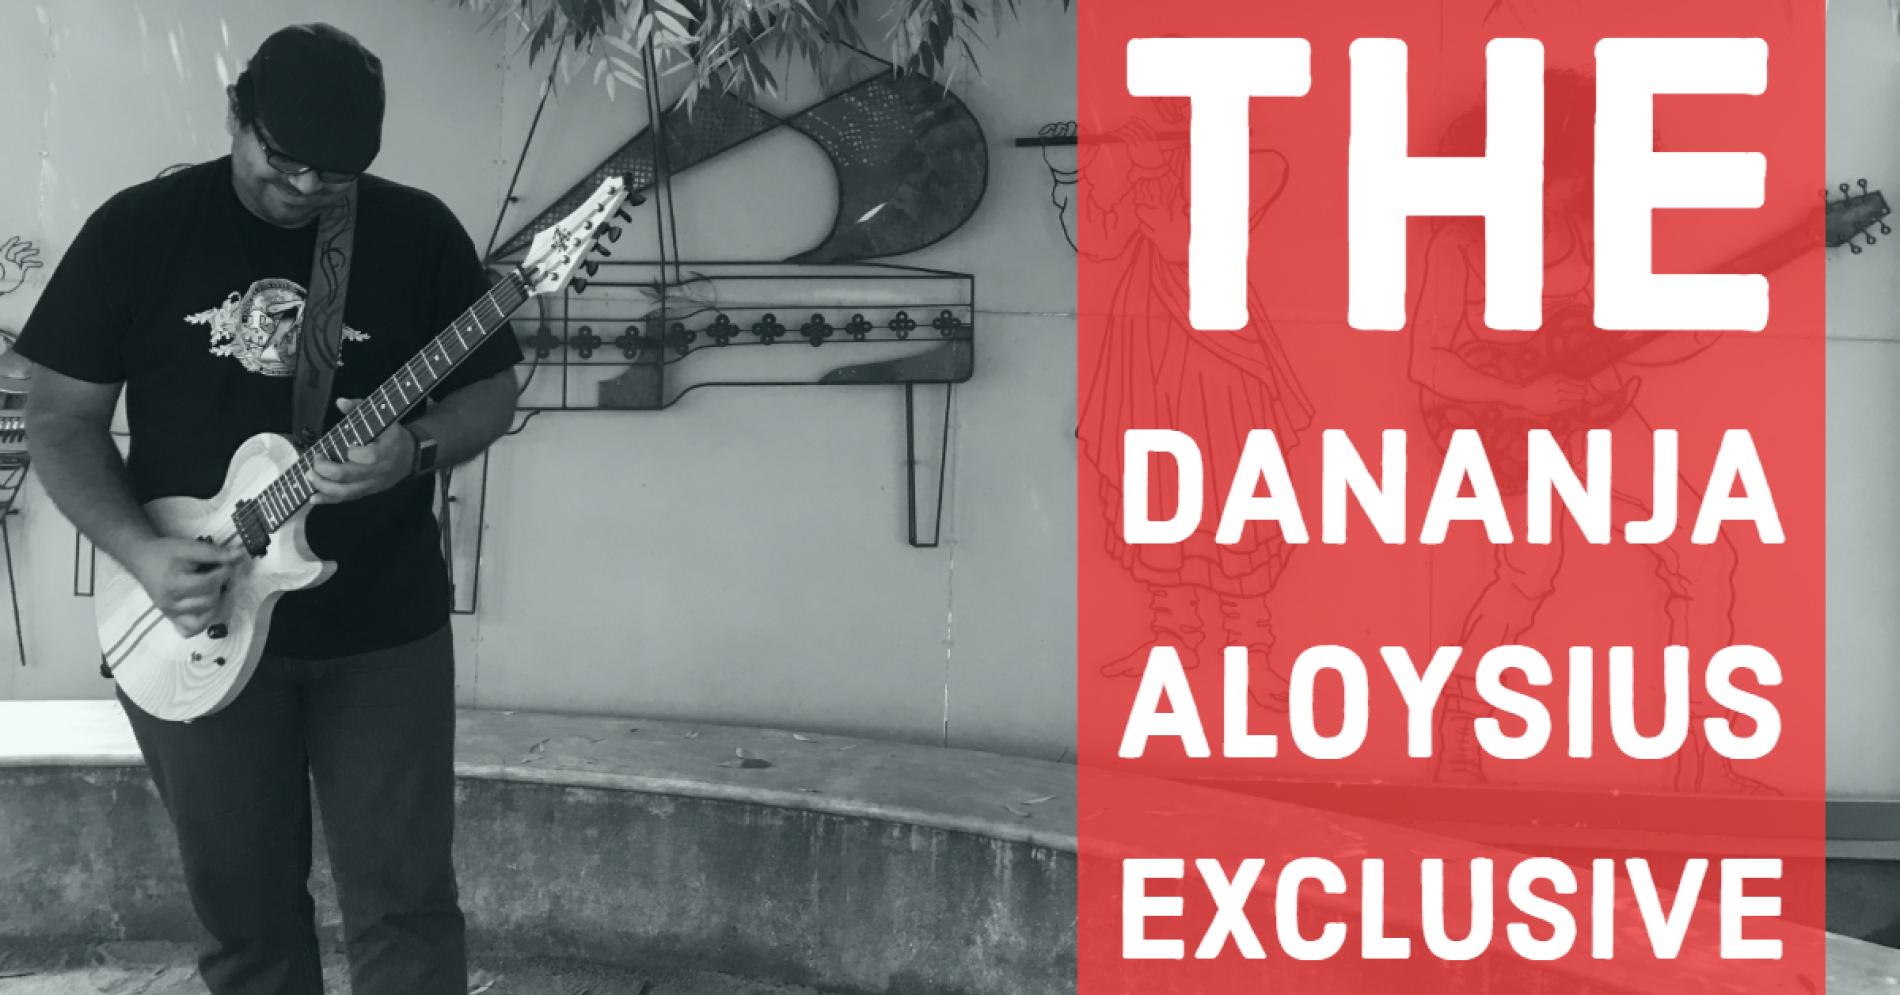 The Dananja Aloysius Exclusive